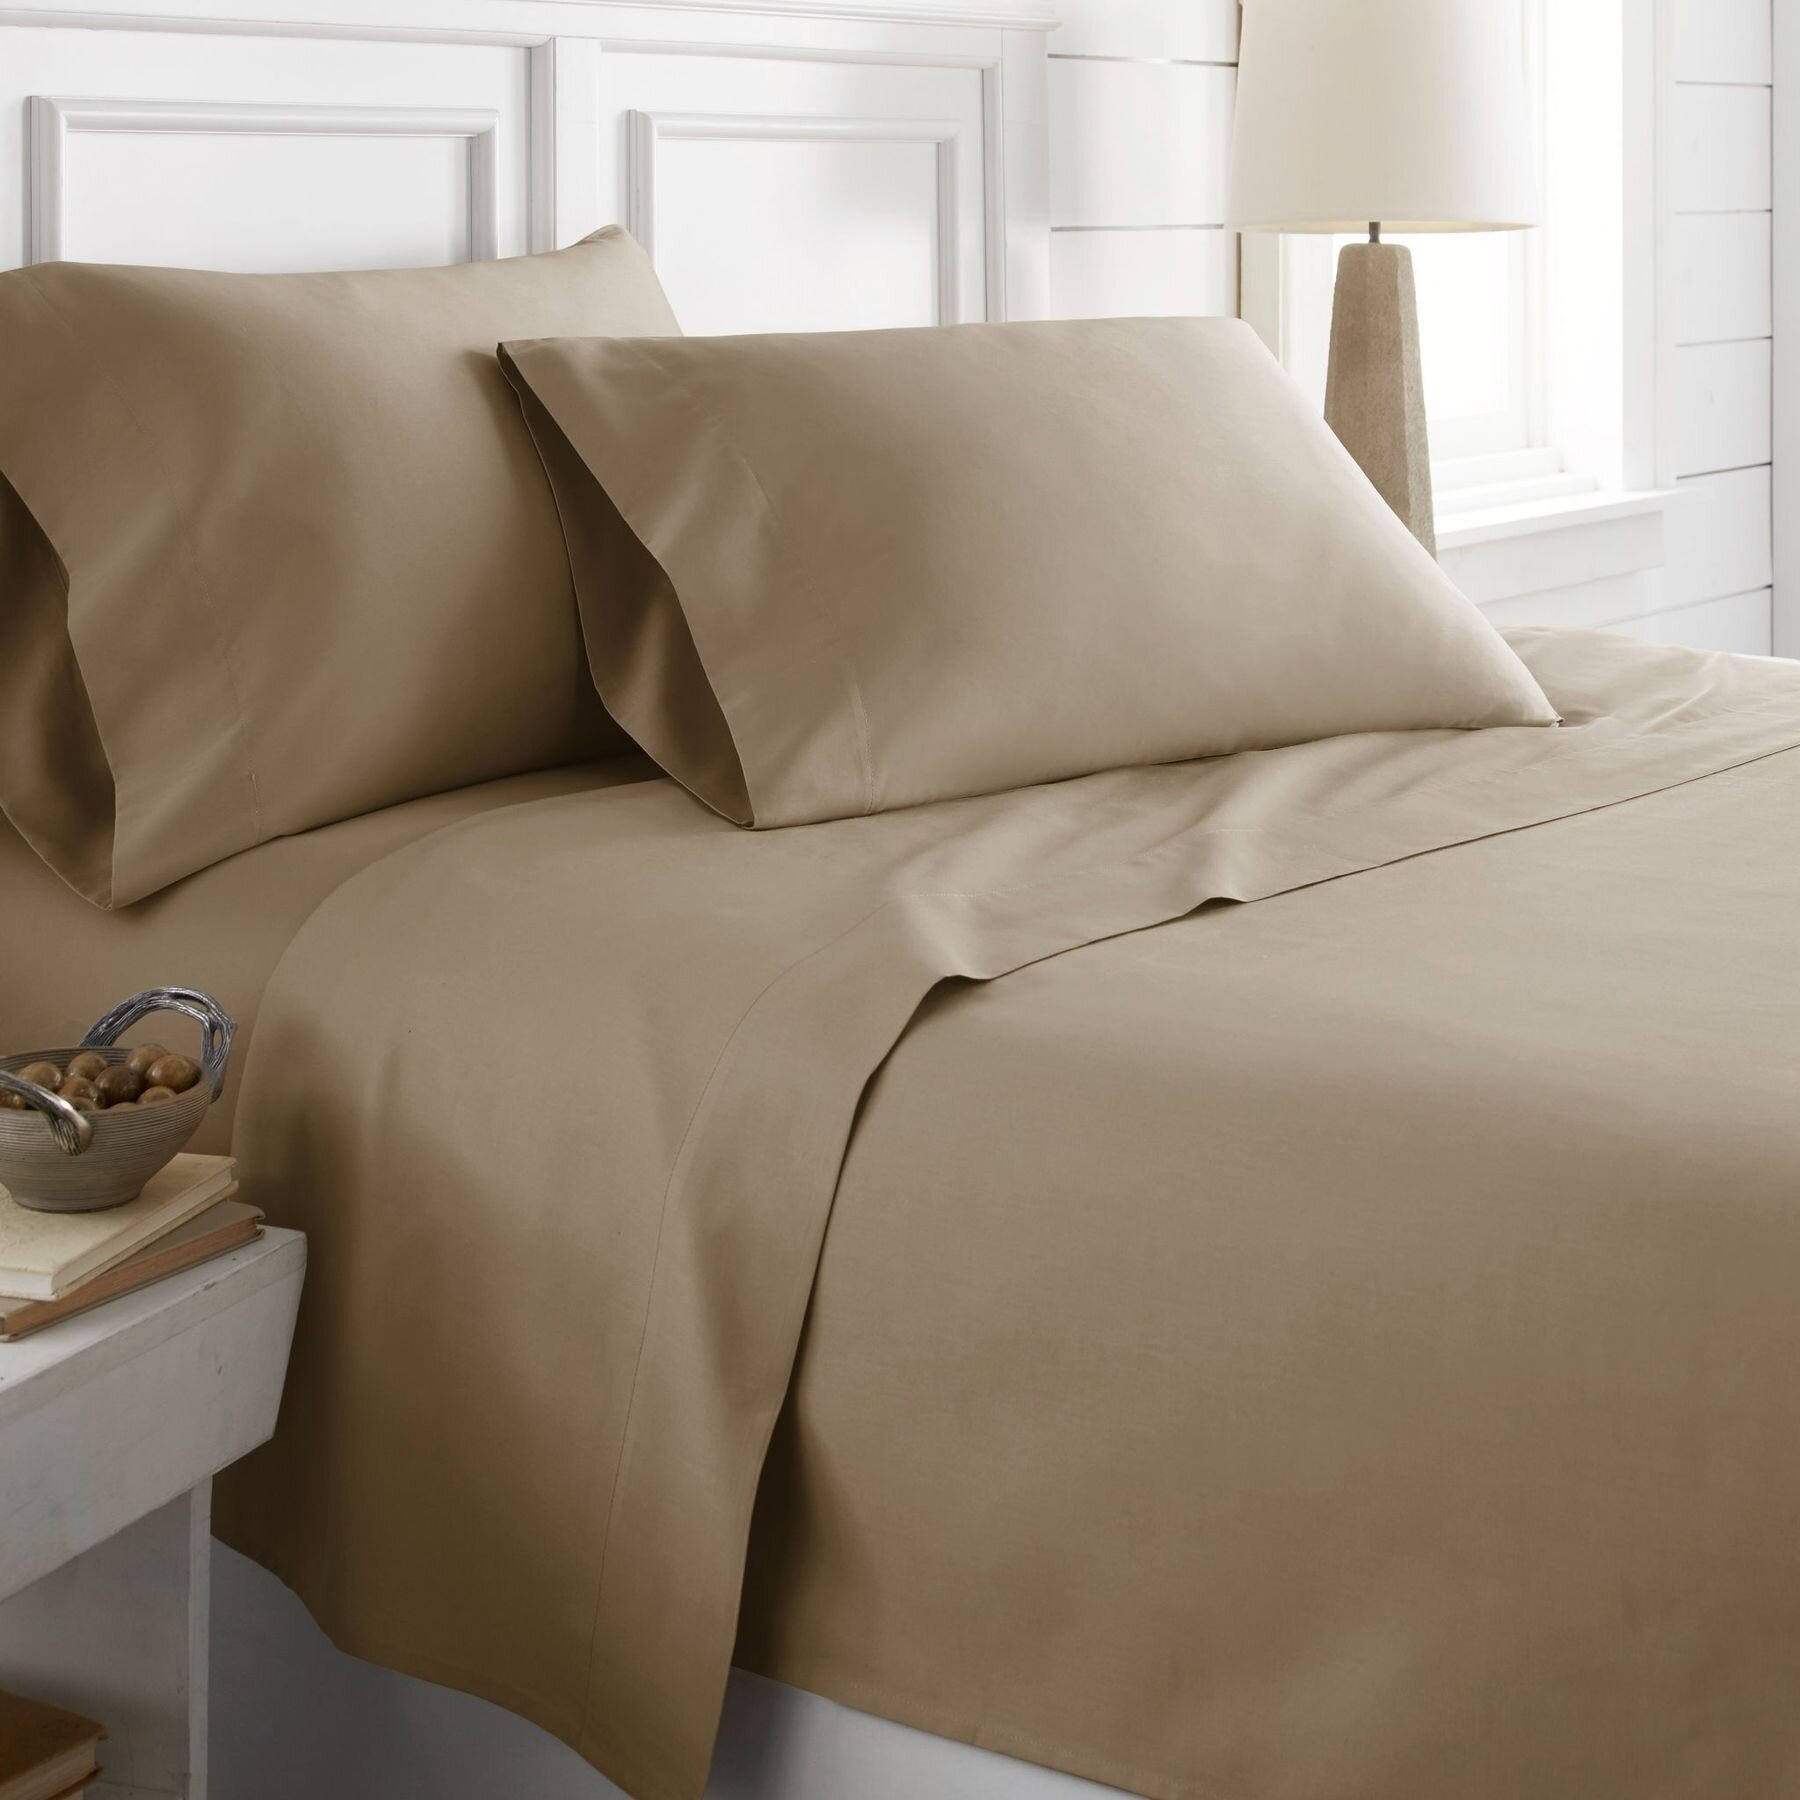 Twin Size 3 piece Bed Sheet Set & Pillow Shams Microfiber Deep Pocket Home Decor 